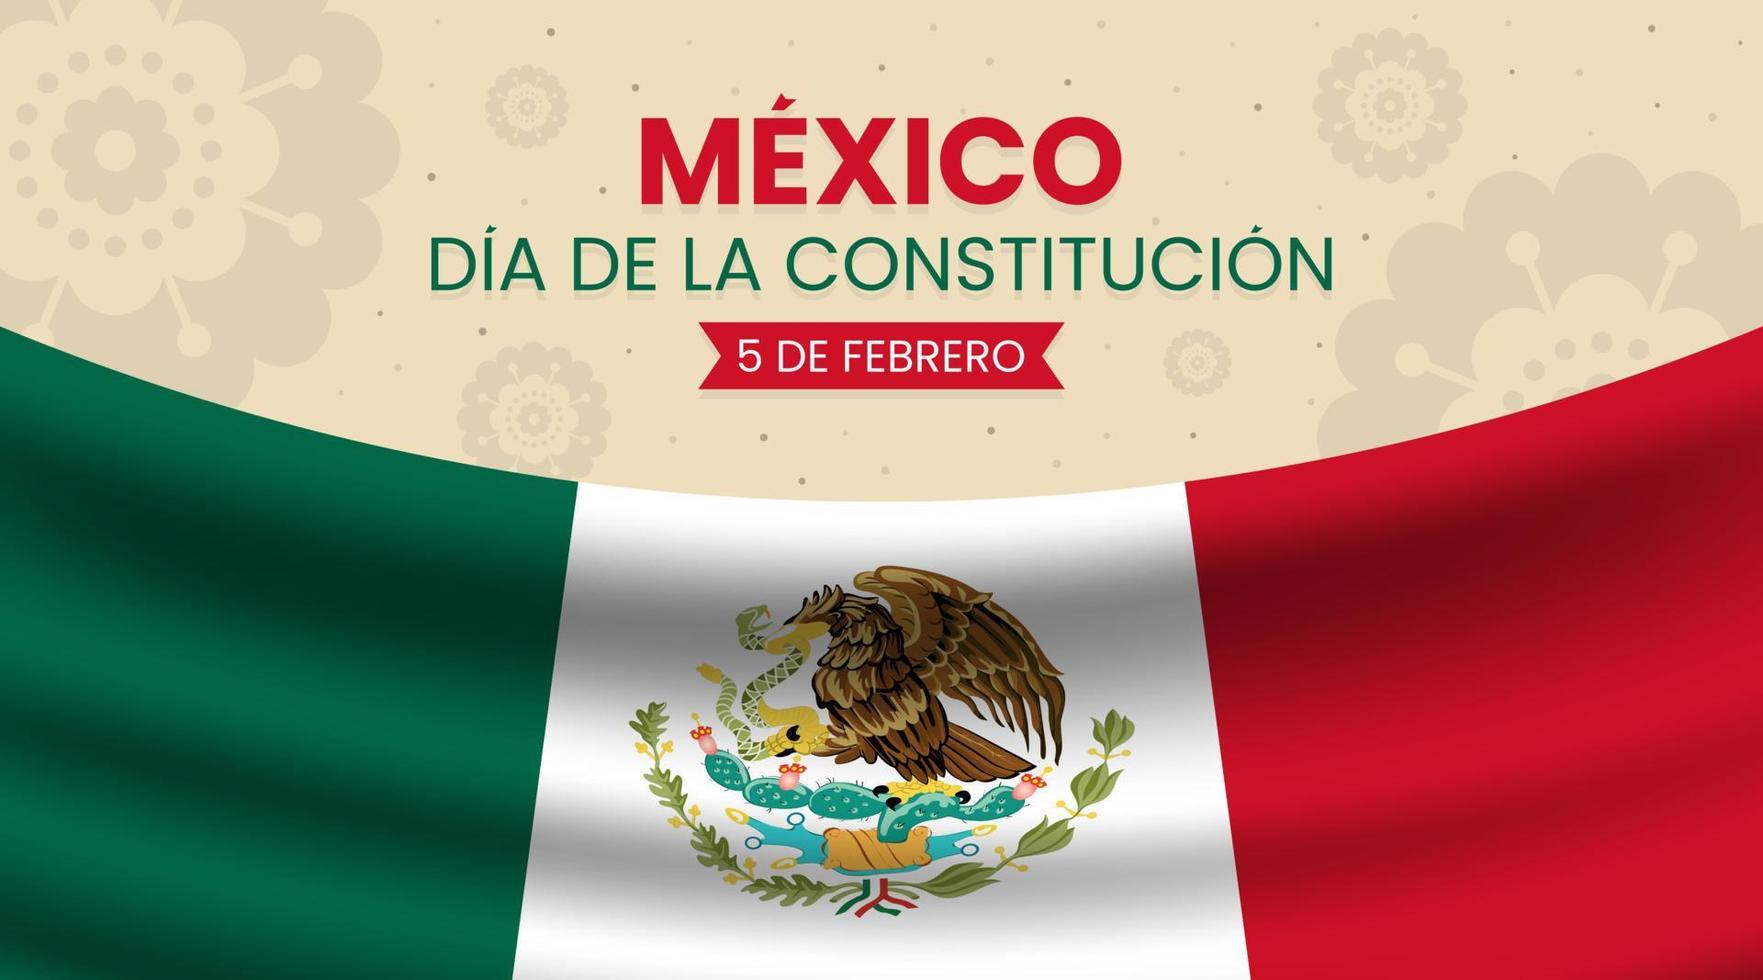 Mexico dia de la constitucion or Mexico constitution day background with realistic flag and ornaments vector